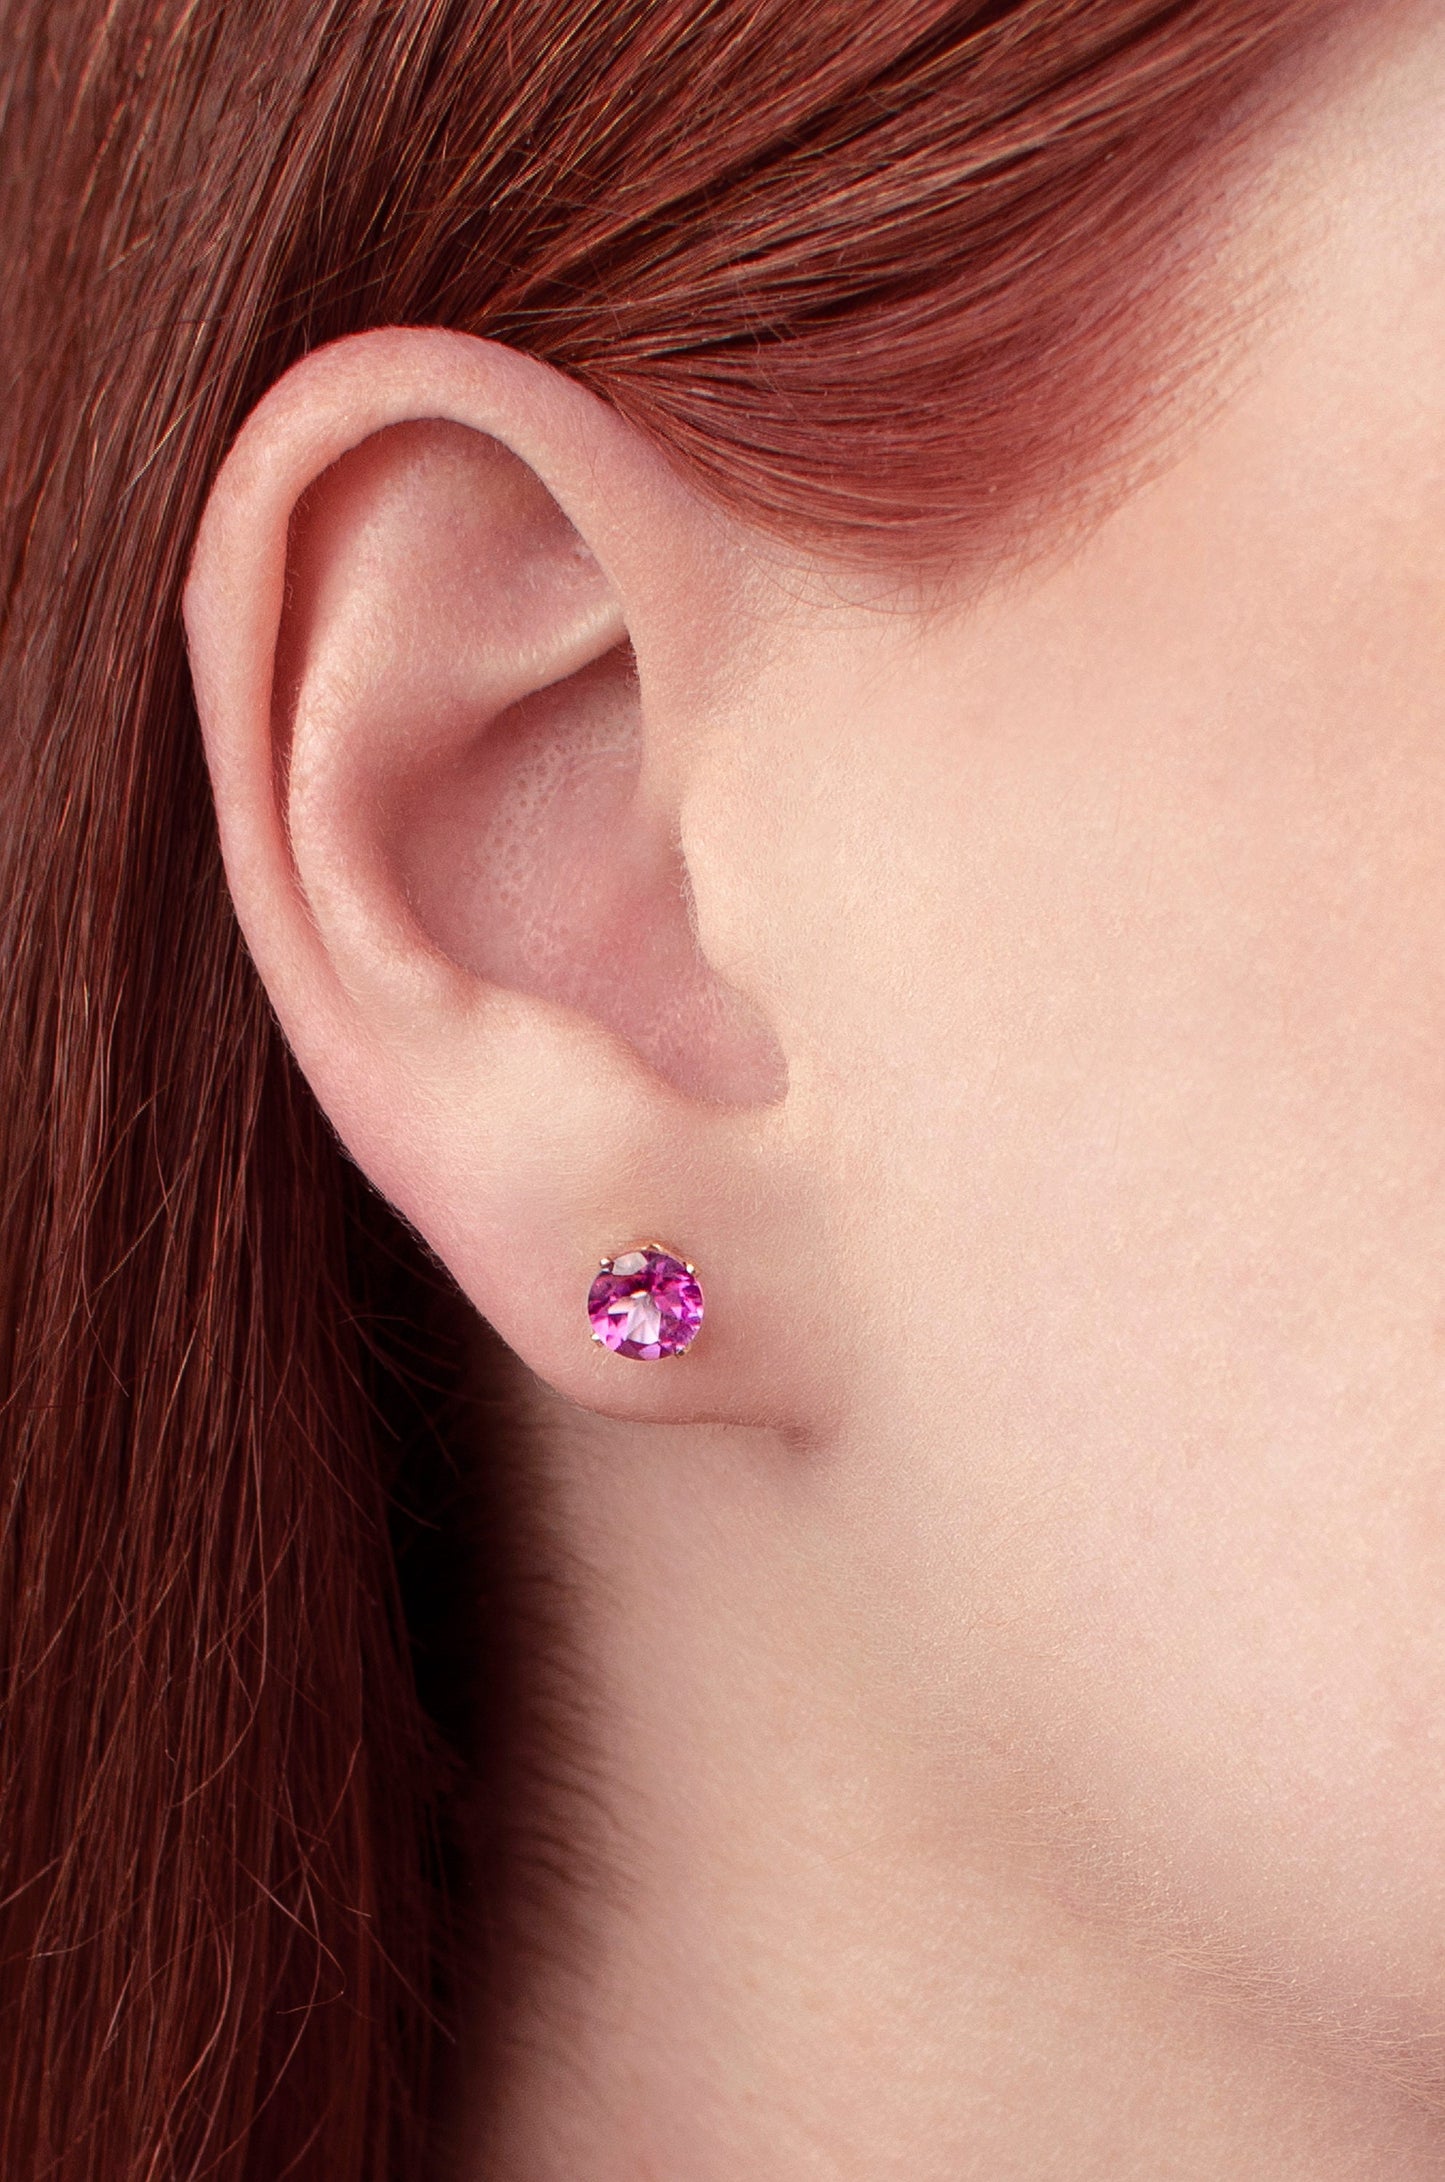 Pink Topaz stud earrings 14k gold filled or sterling silver, Scorpio gift, Zodiac birthstone earrings studs, November birthstone earrings